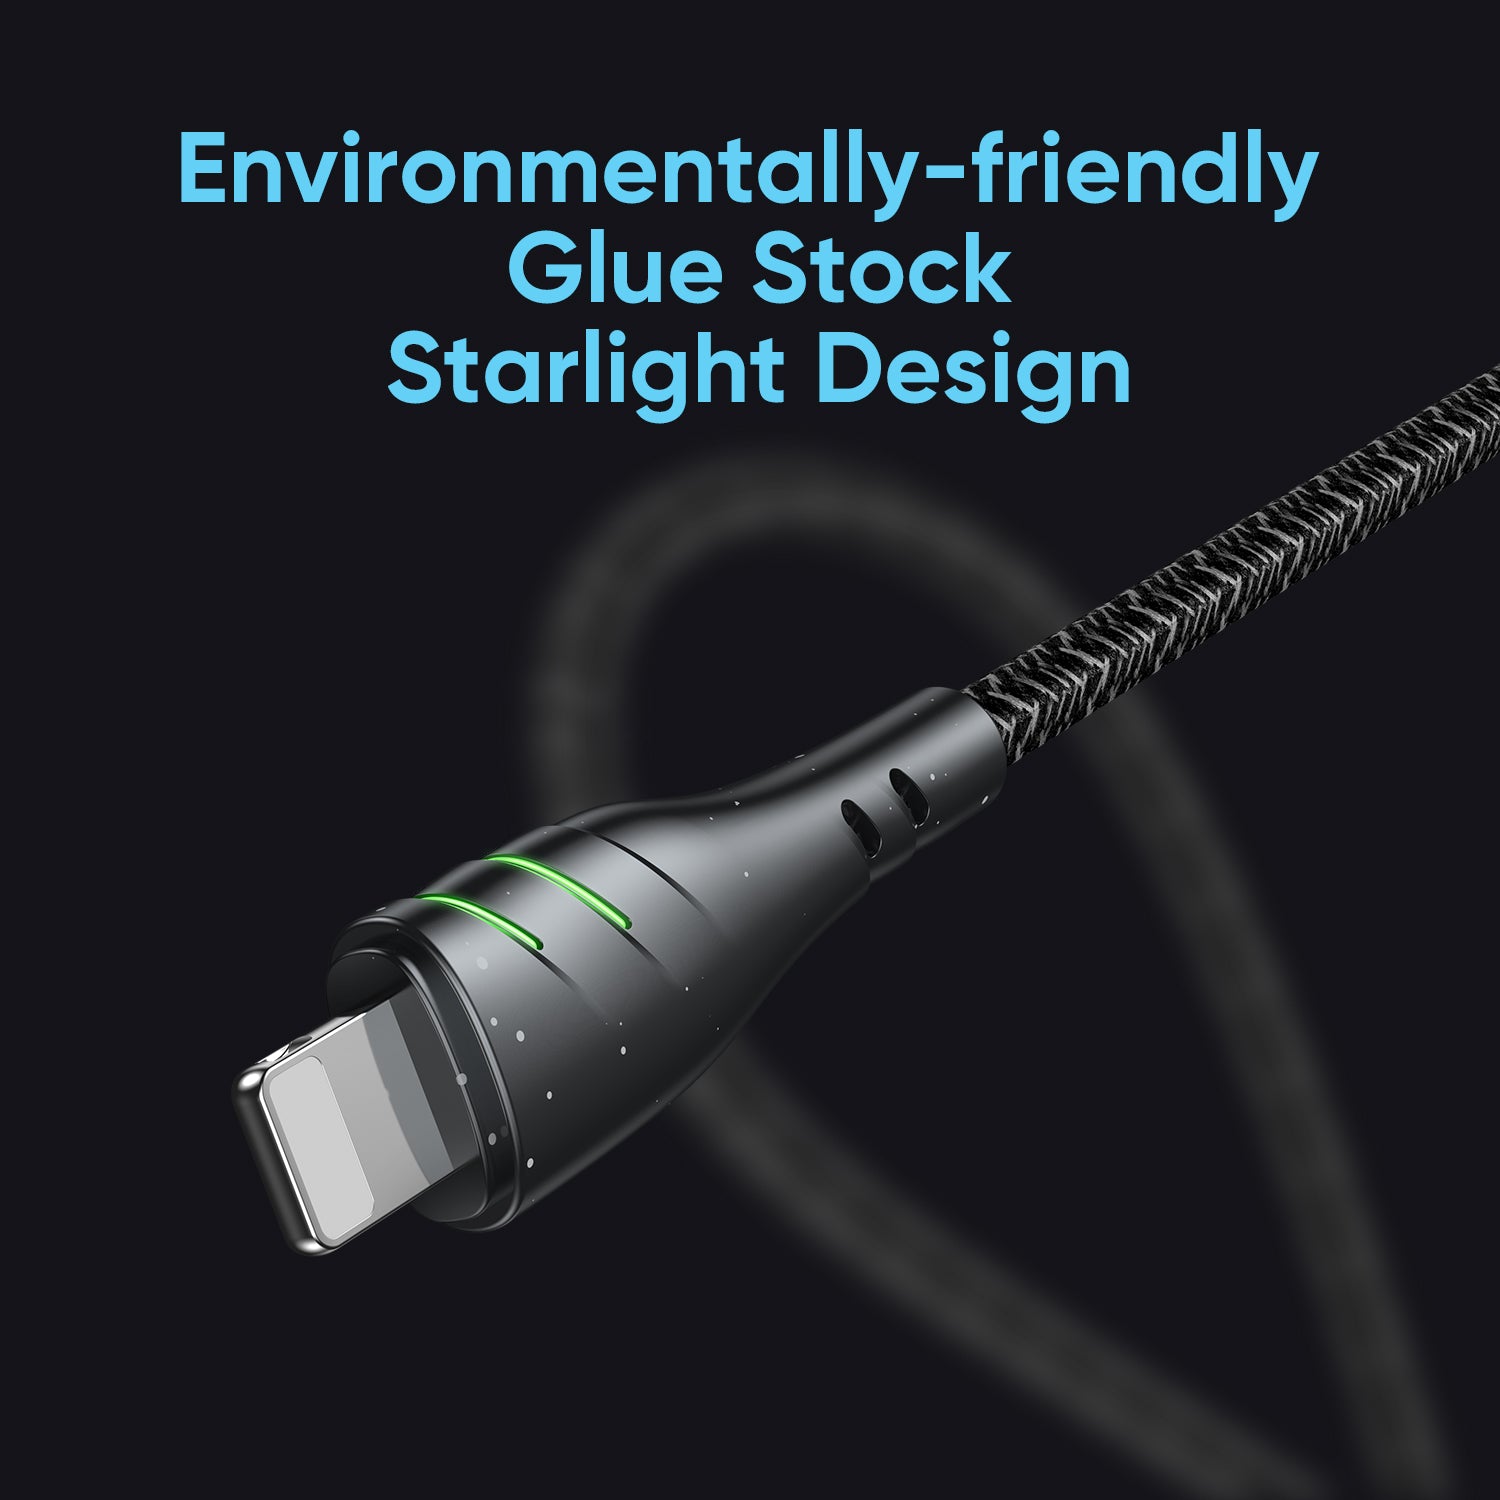 Environmentally -friendly glue stock starlight Design